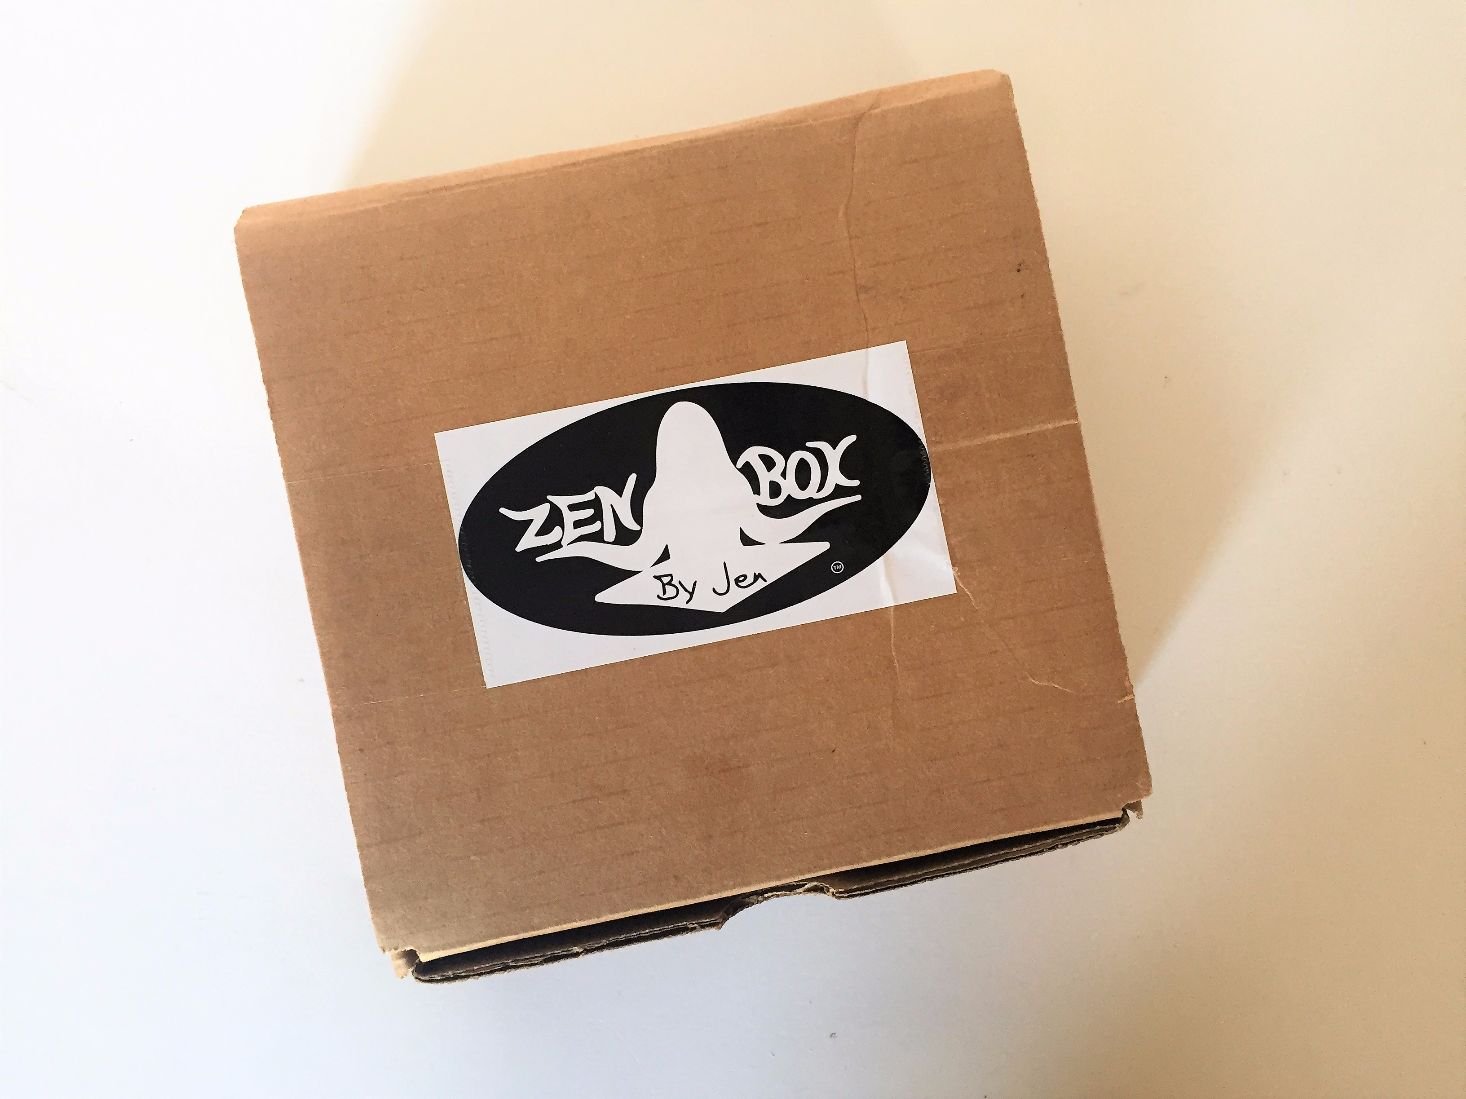 Zen Box by Jen Subscription Review + Coupon – November 2016